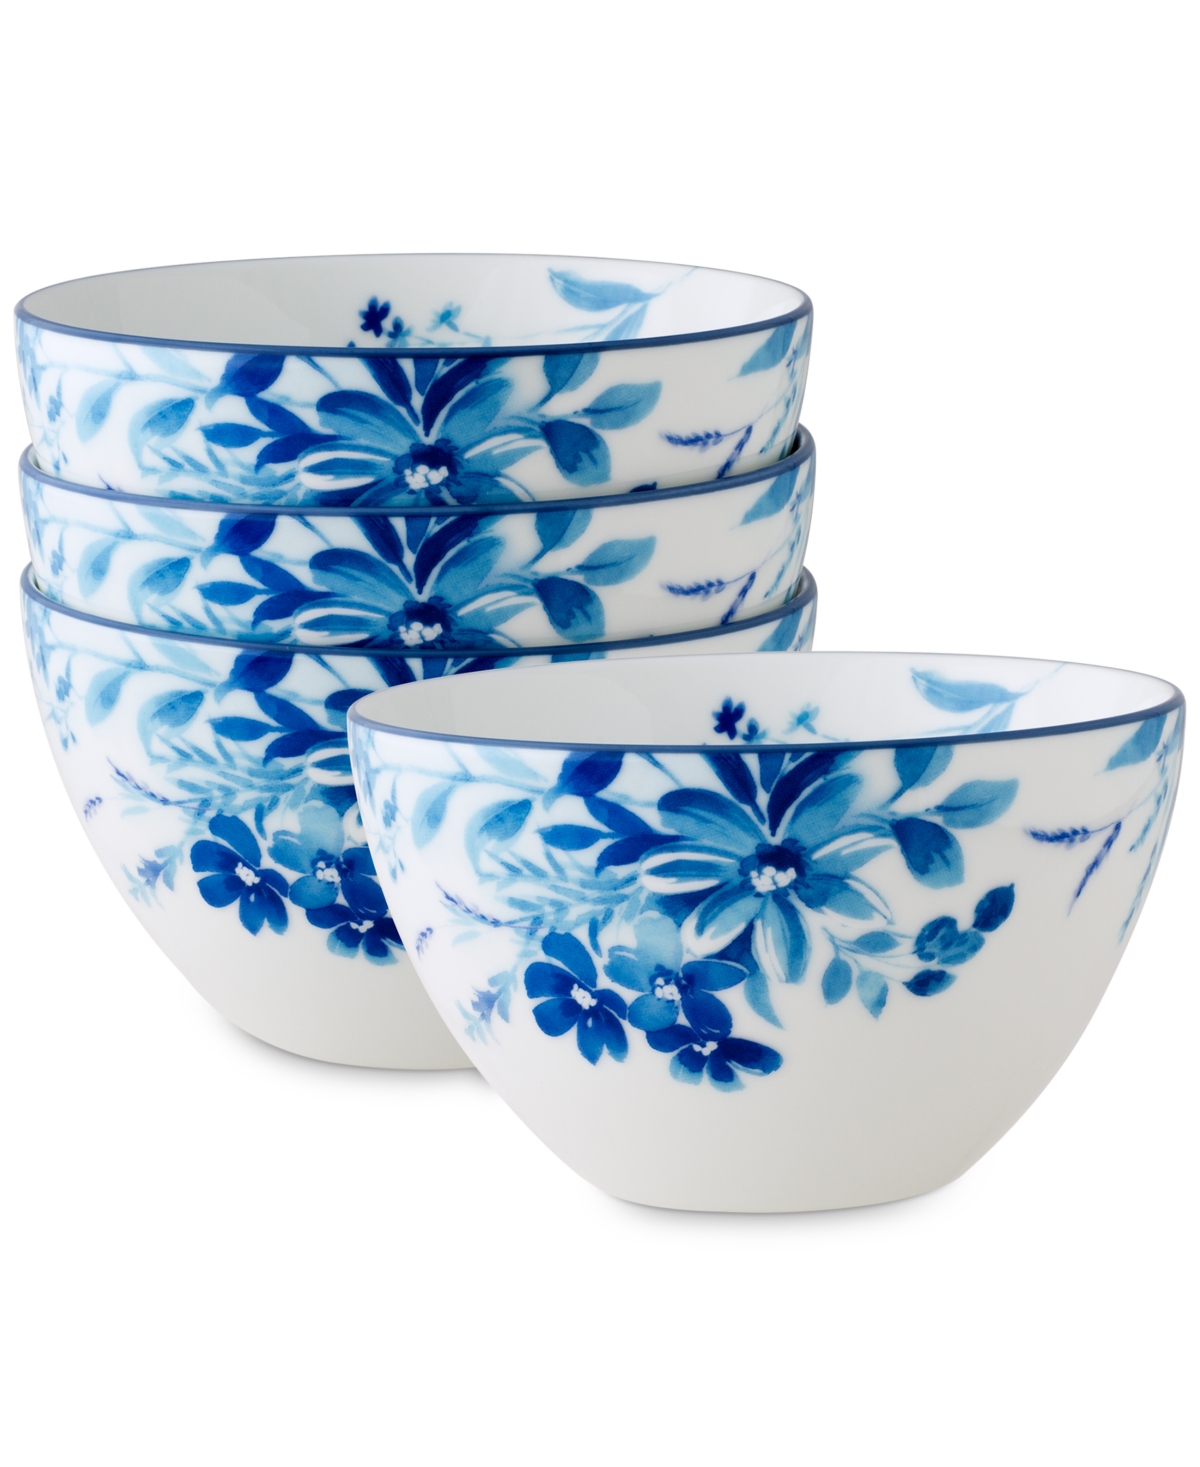 Blossom Road Cereal Bowls, Set of 4 - White/blue